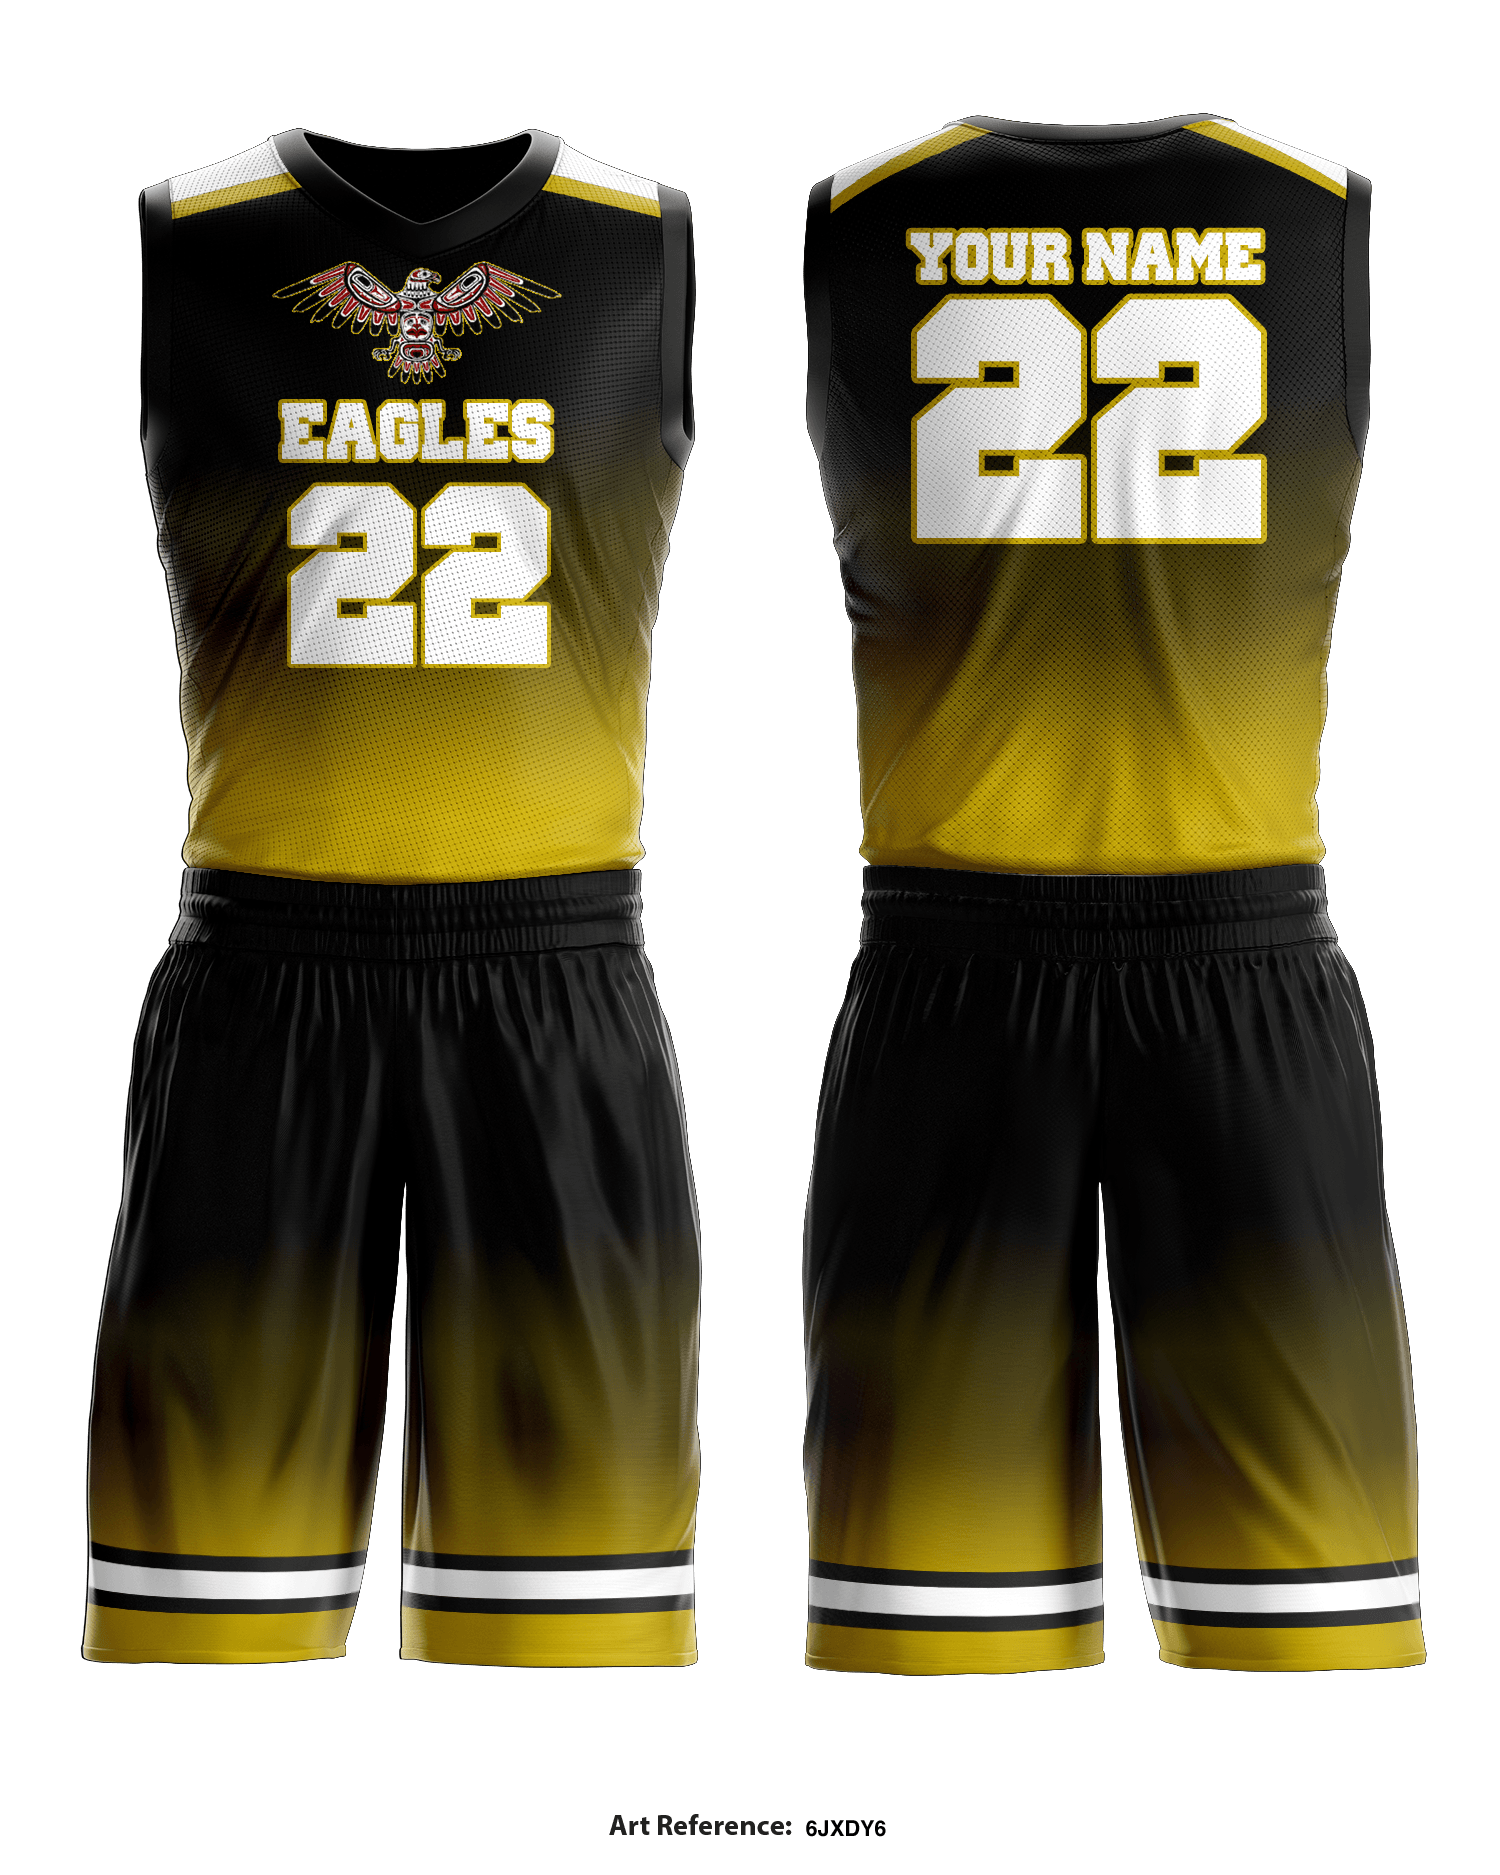 Eagles - Basketball Uniform - 6jxDY6 